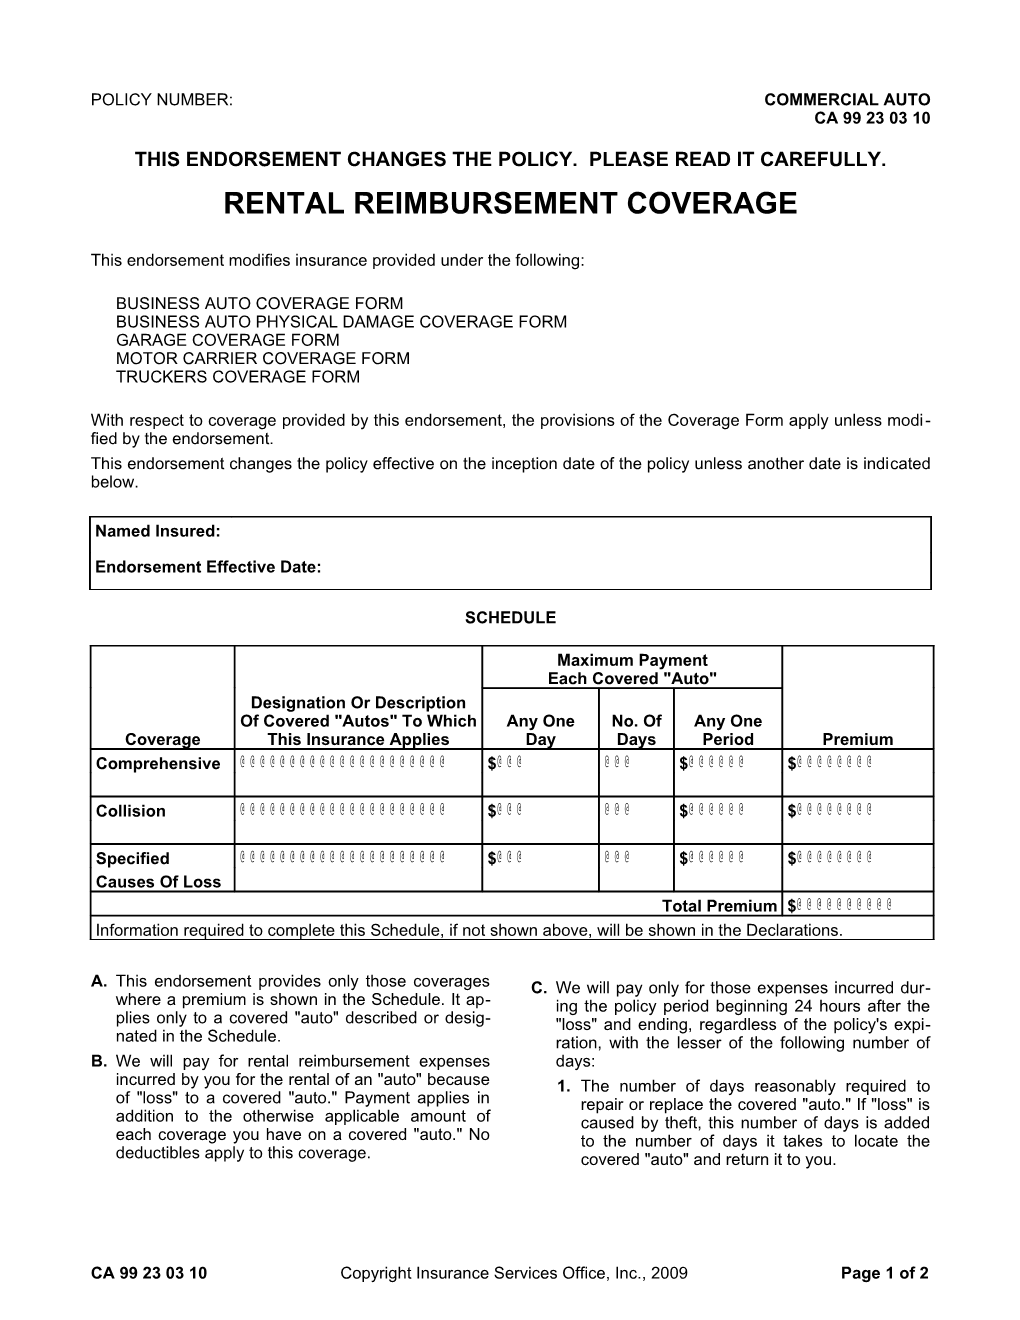 Rental Reimbursement Coverage